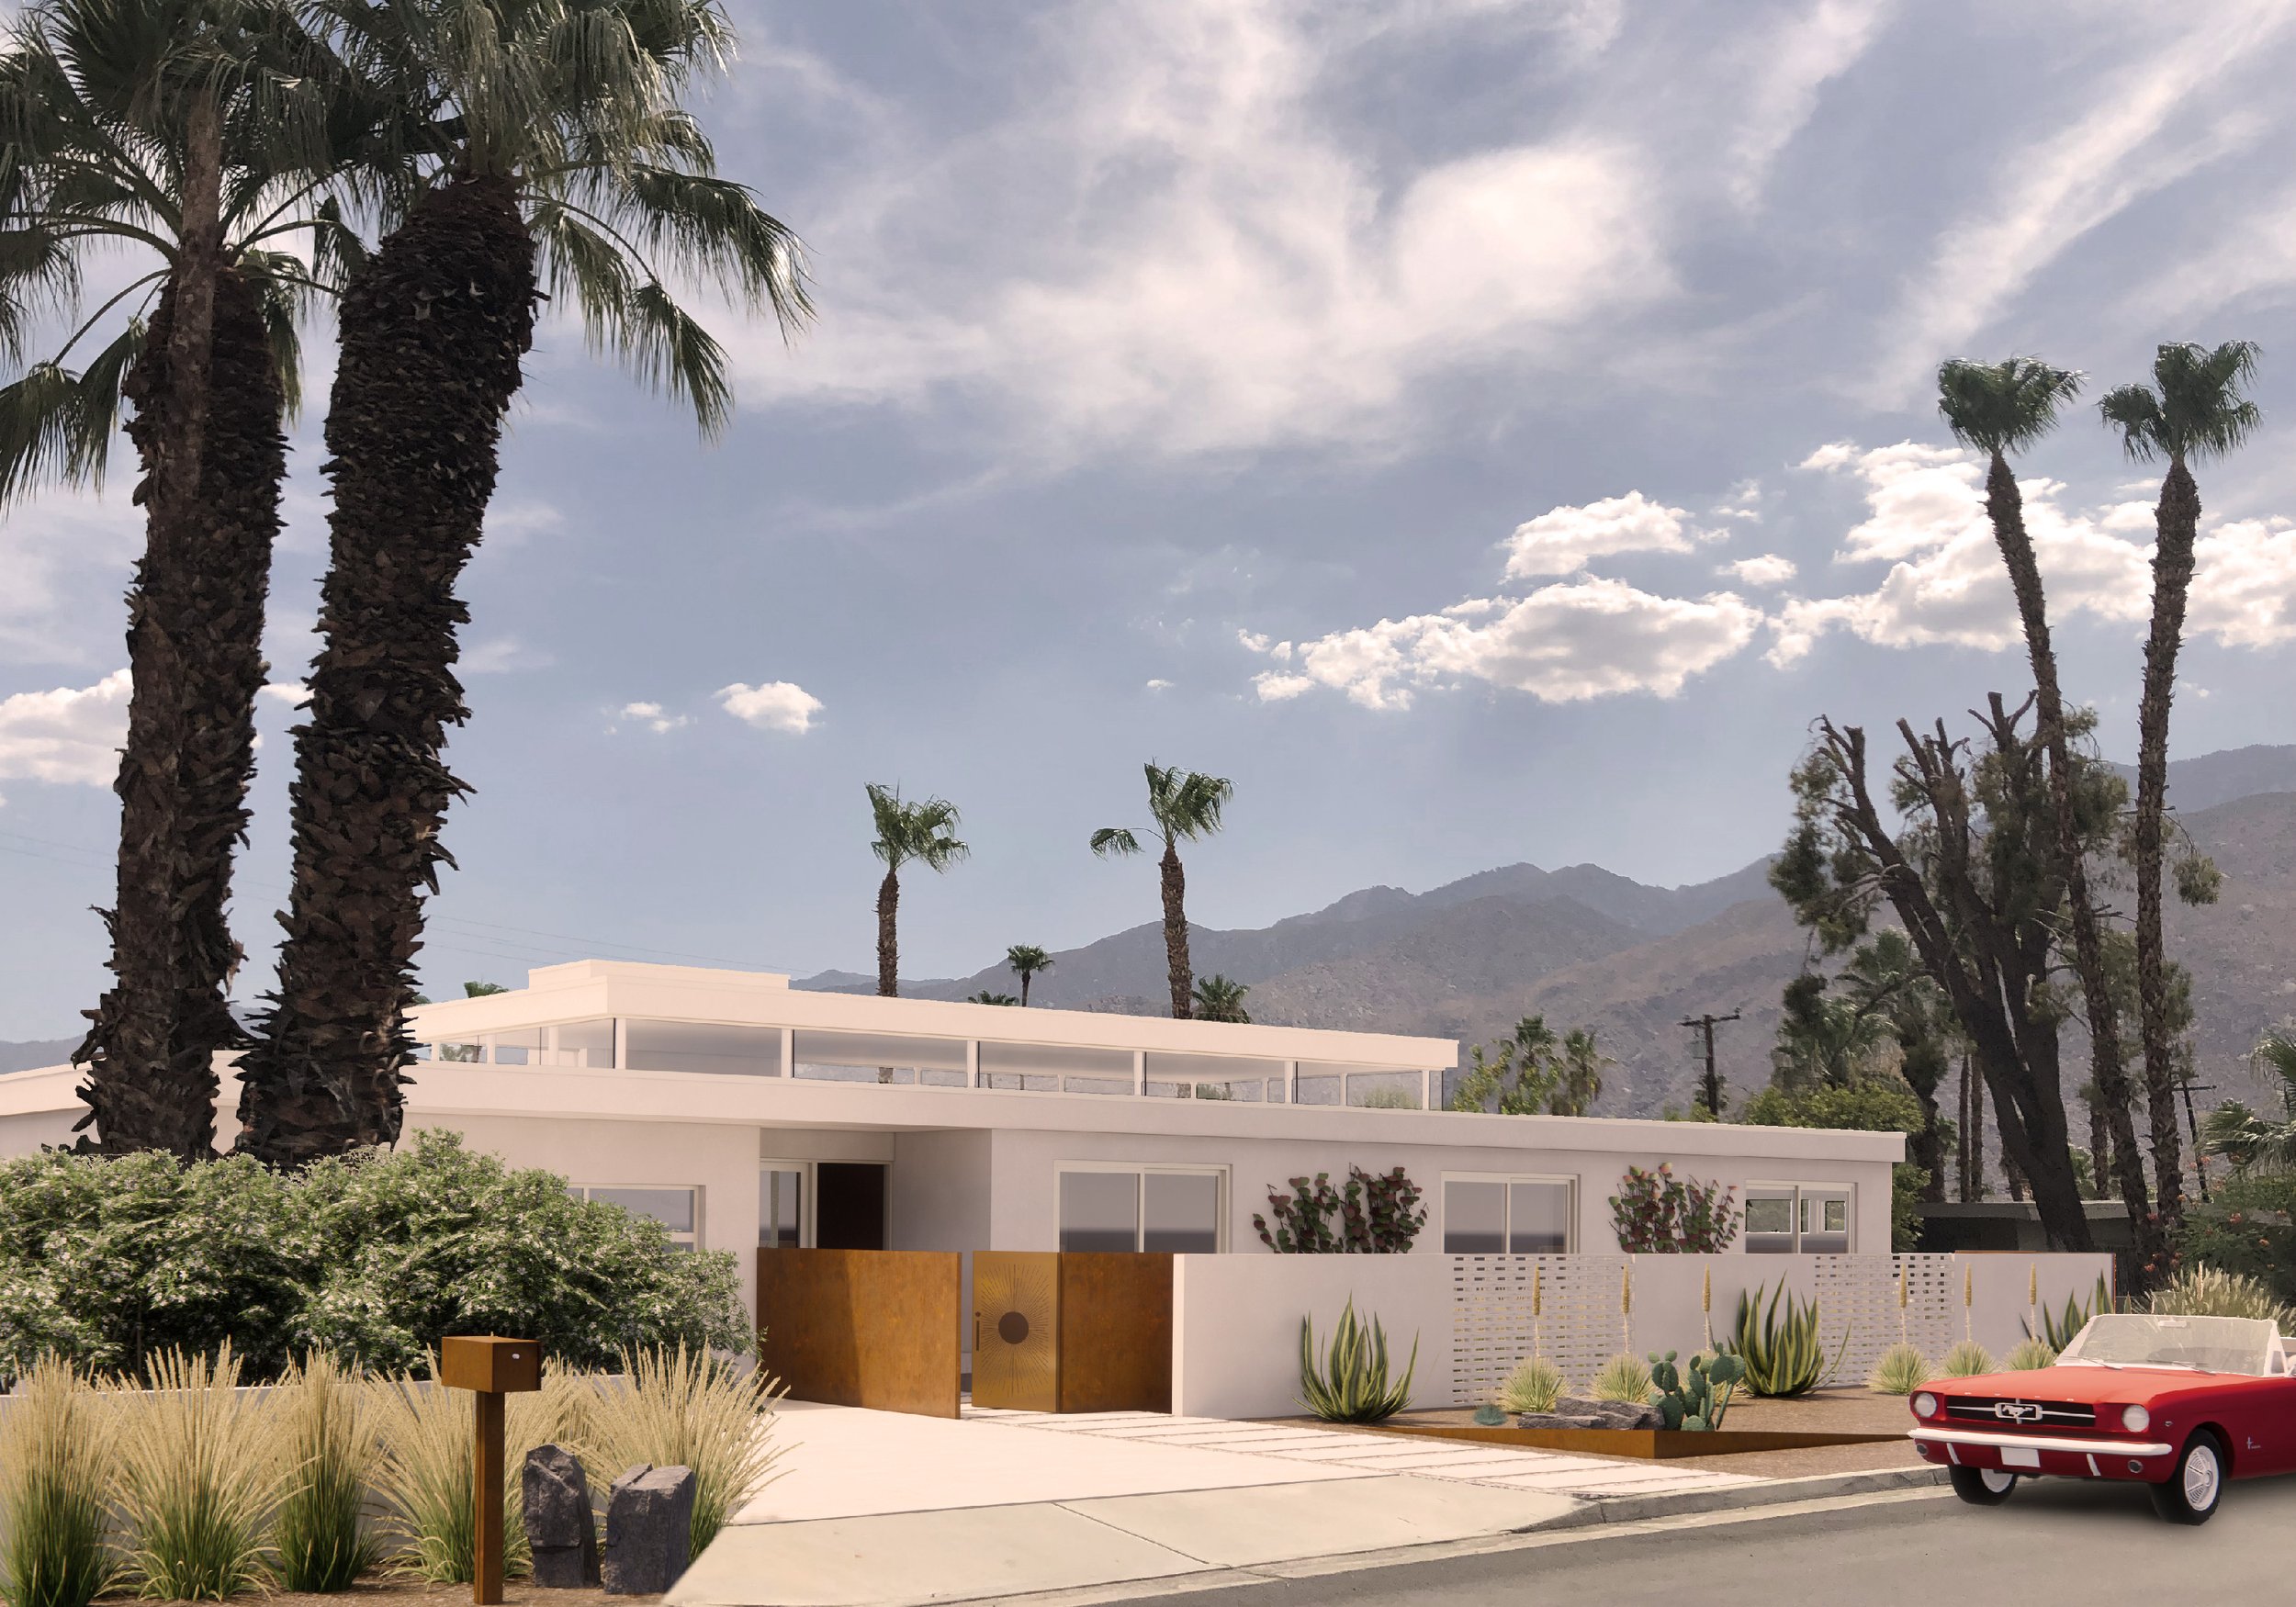 Guggenheim Architecture Palm Springs modern home.jpg